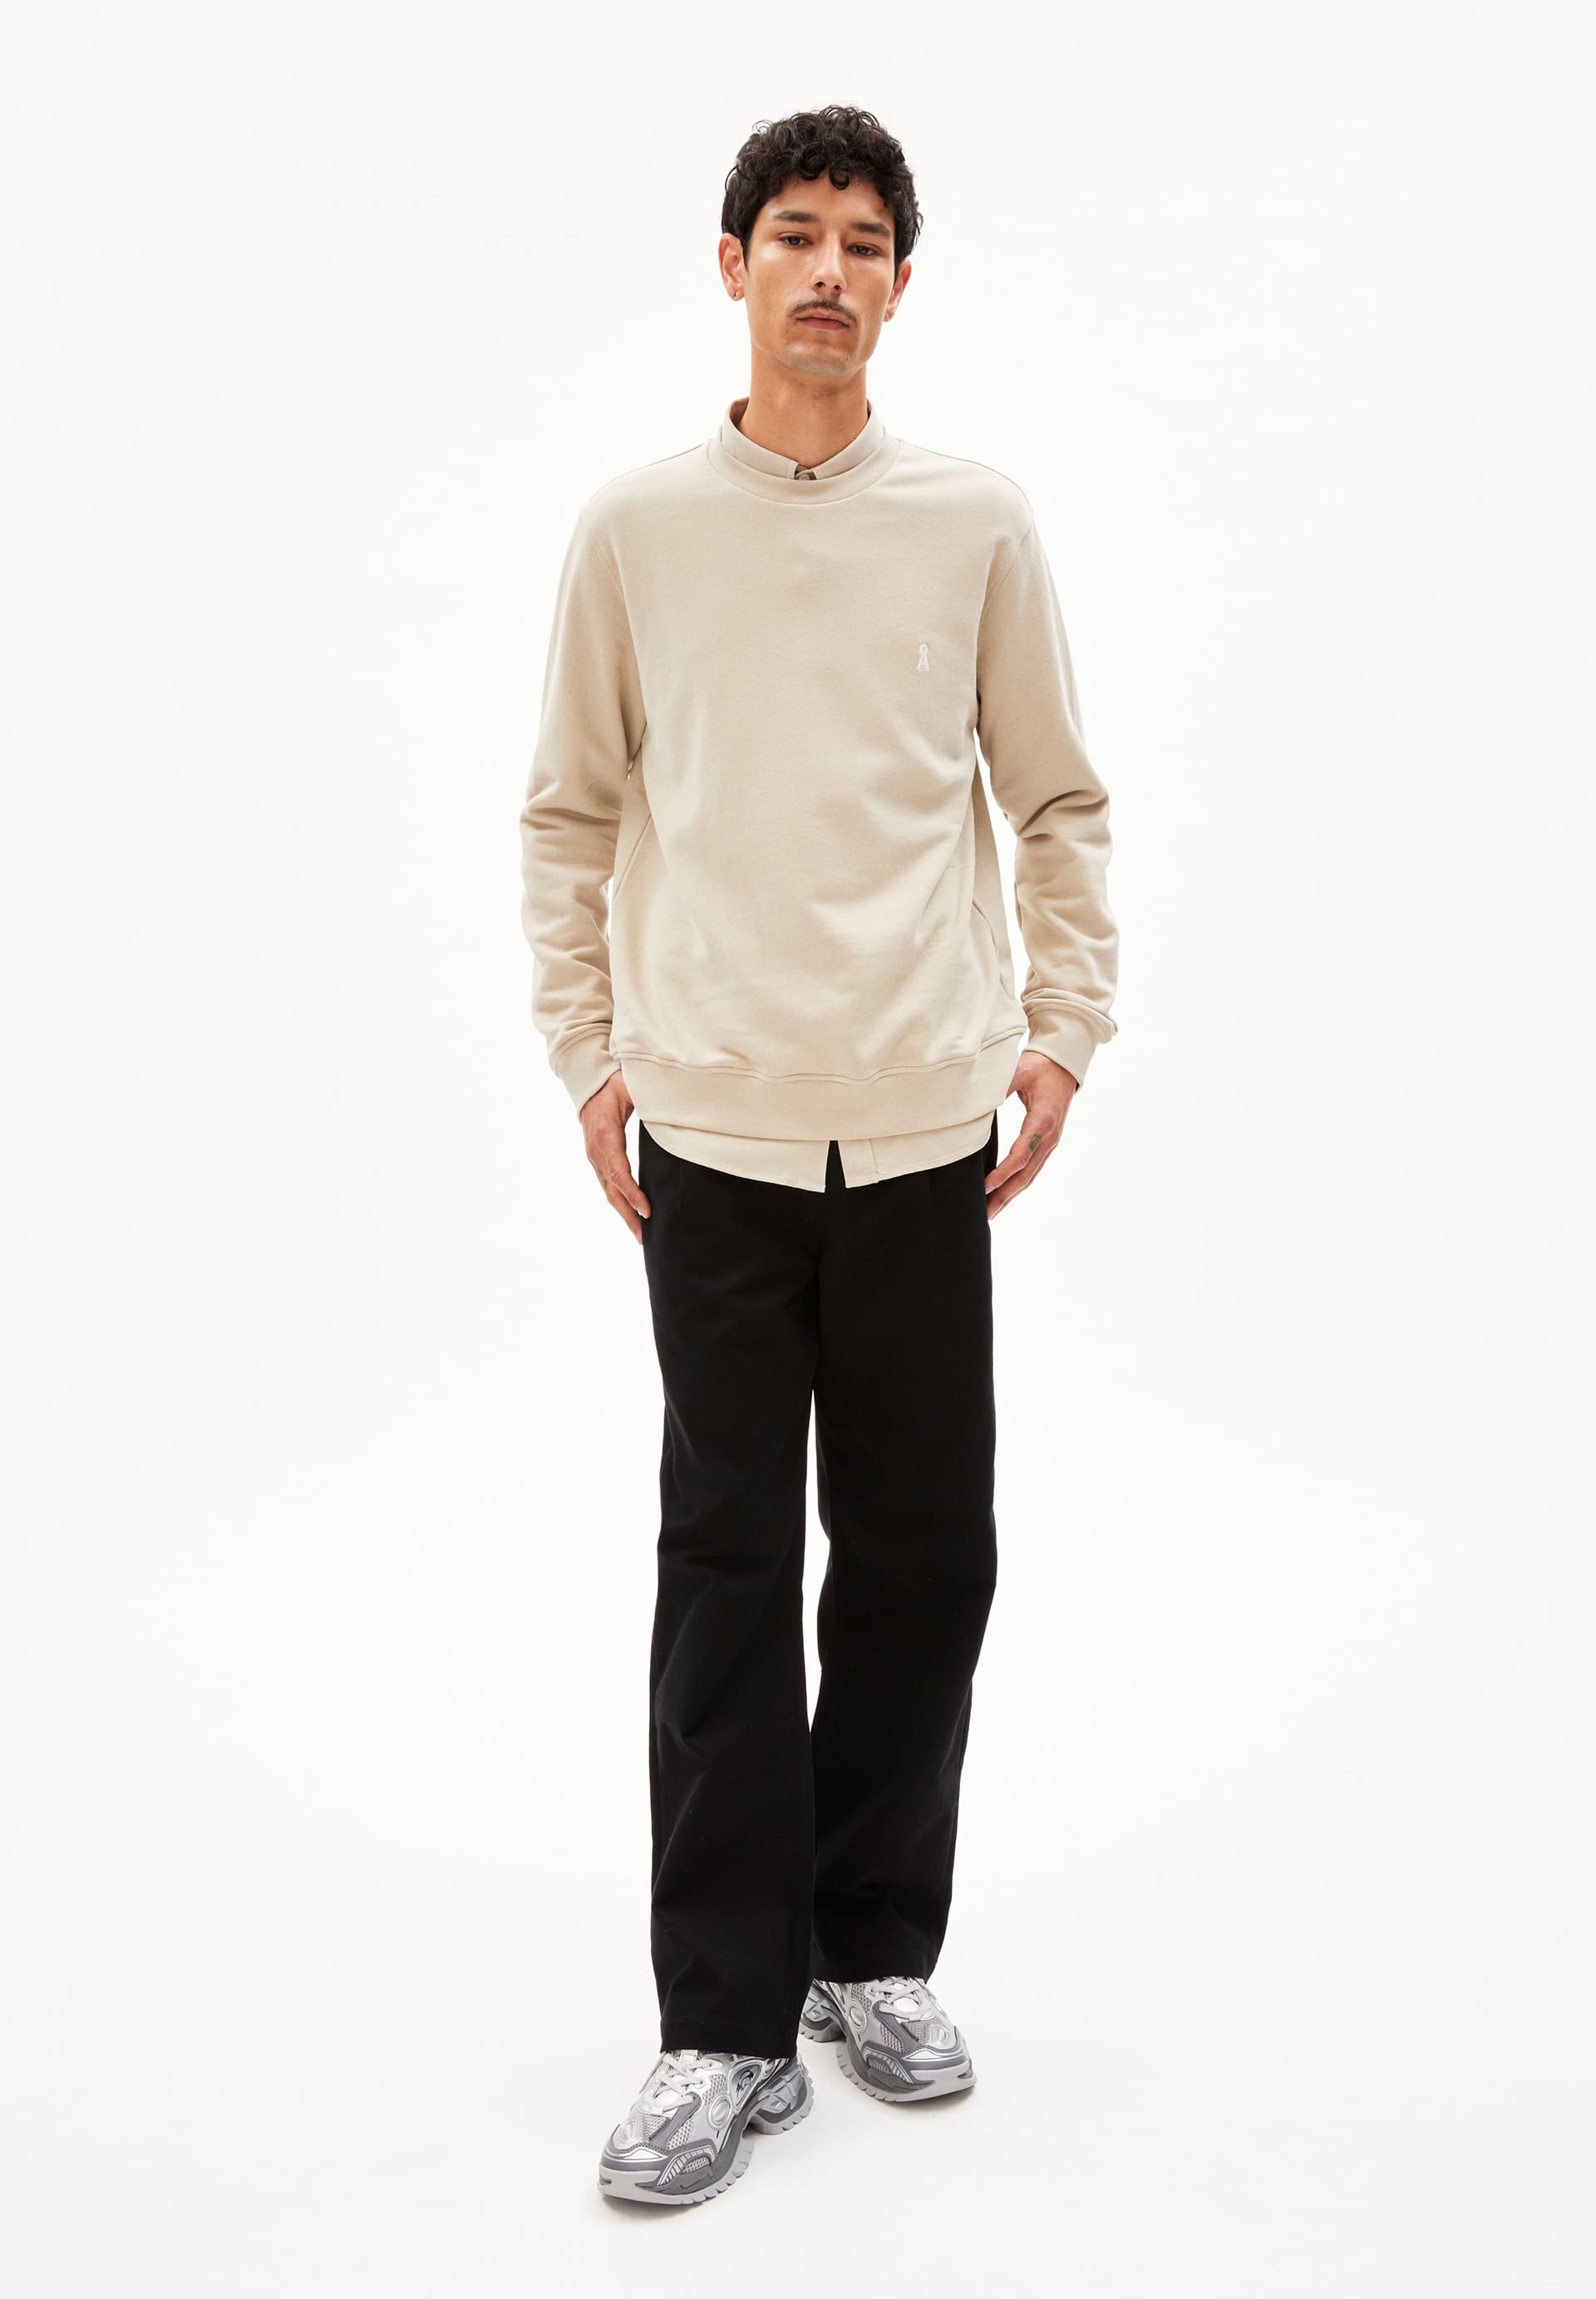 BAARO COMFORT Sweatshirt Regular Fit made of Organic Cotton Mix